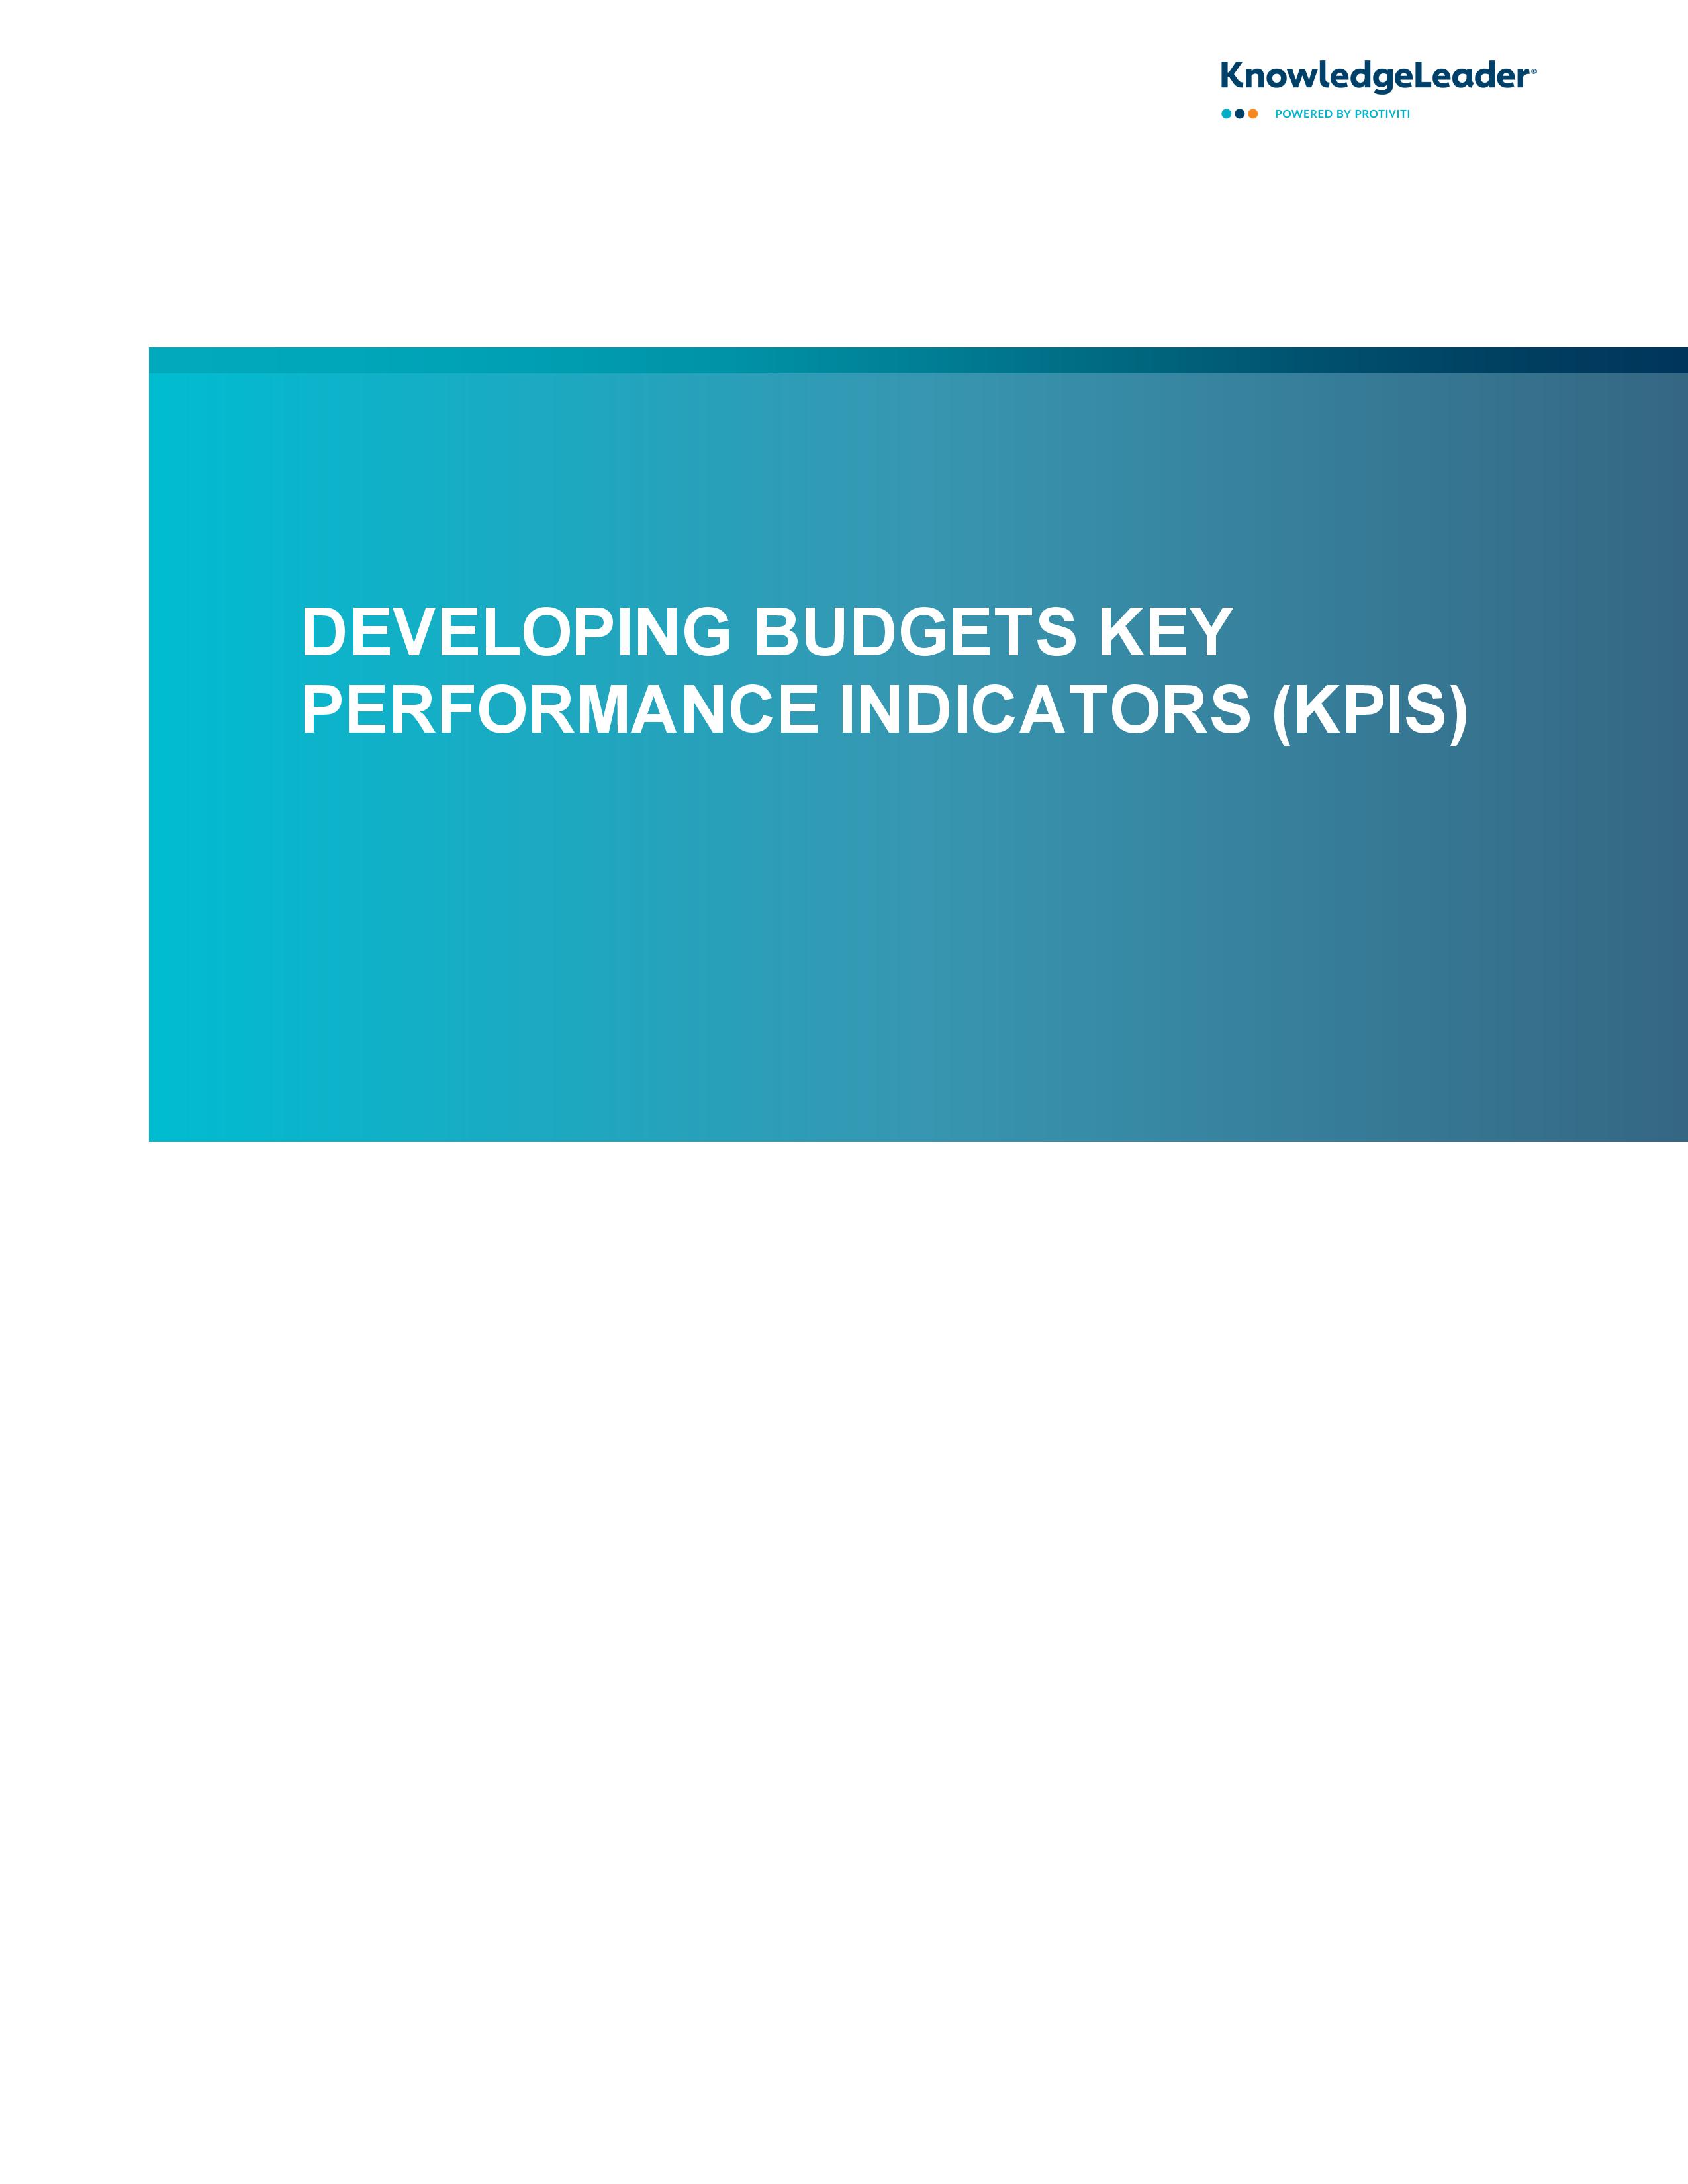 Developing Budgets Key Performance Indicators (KPIs)